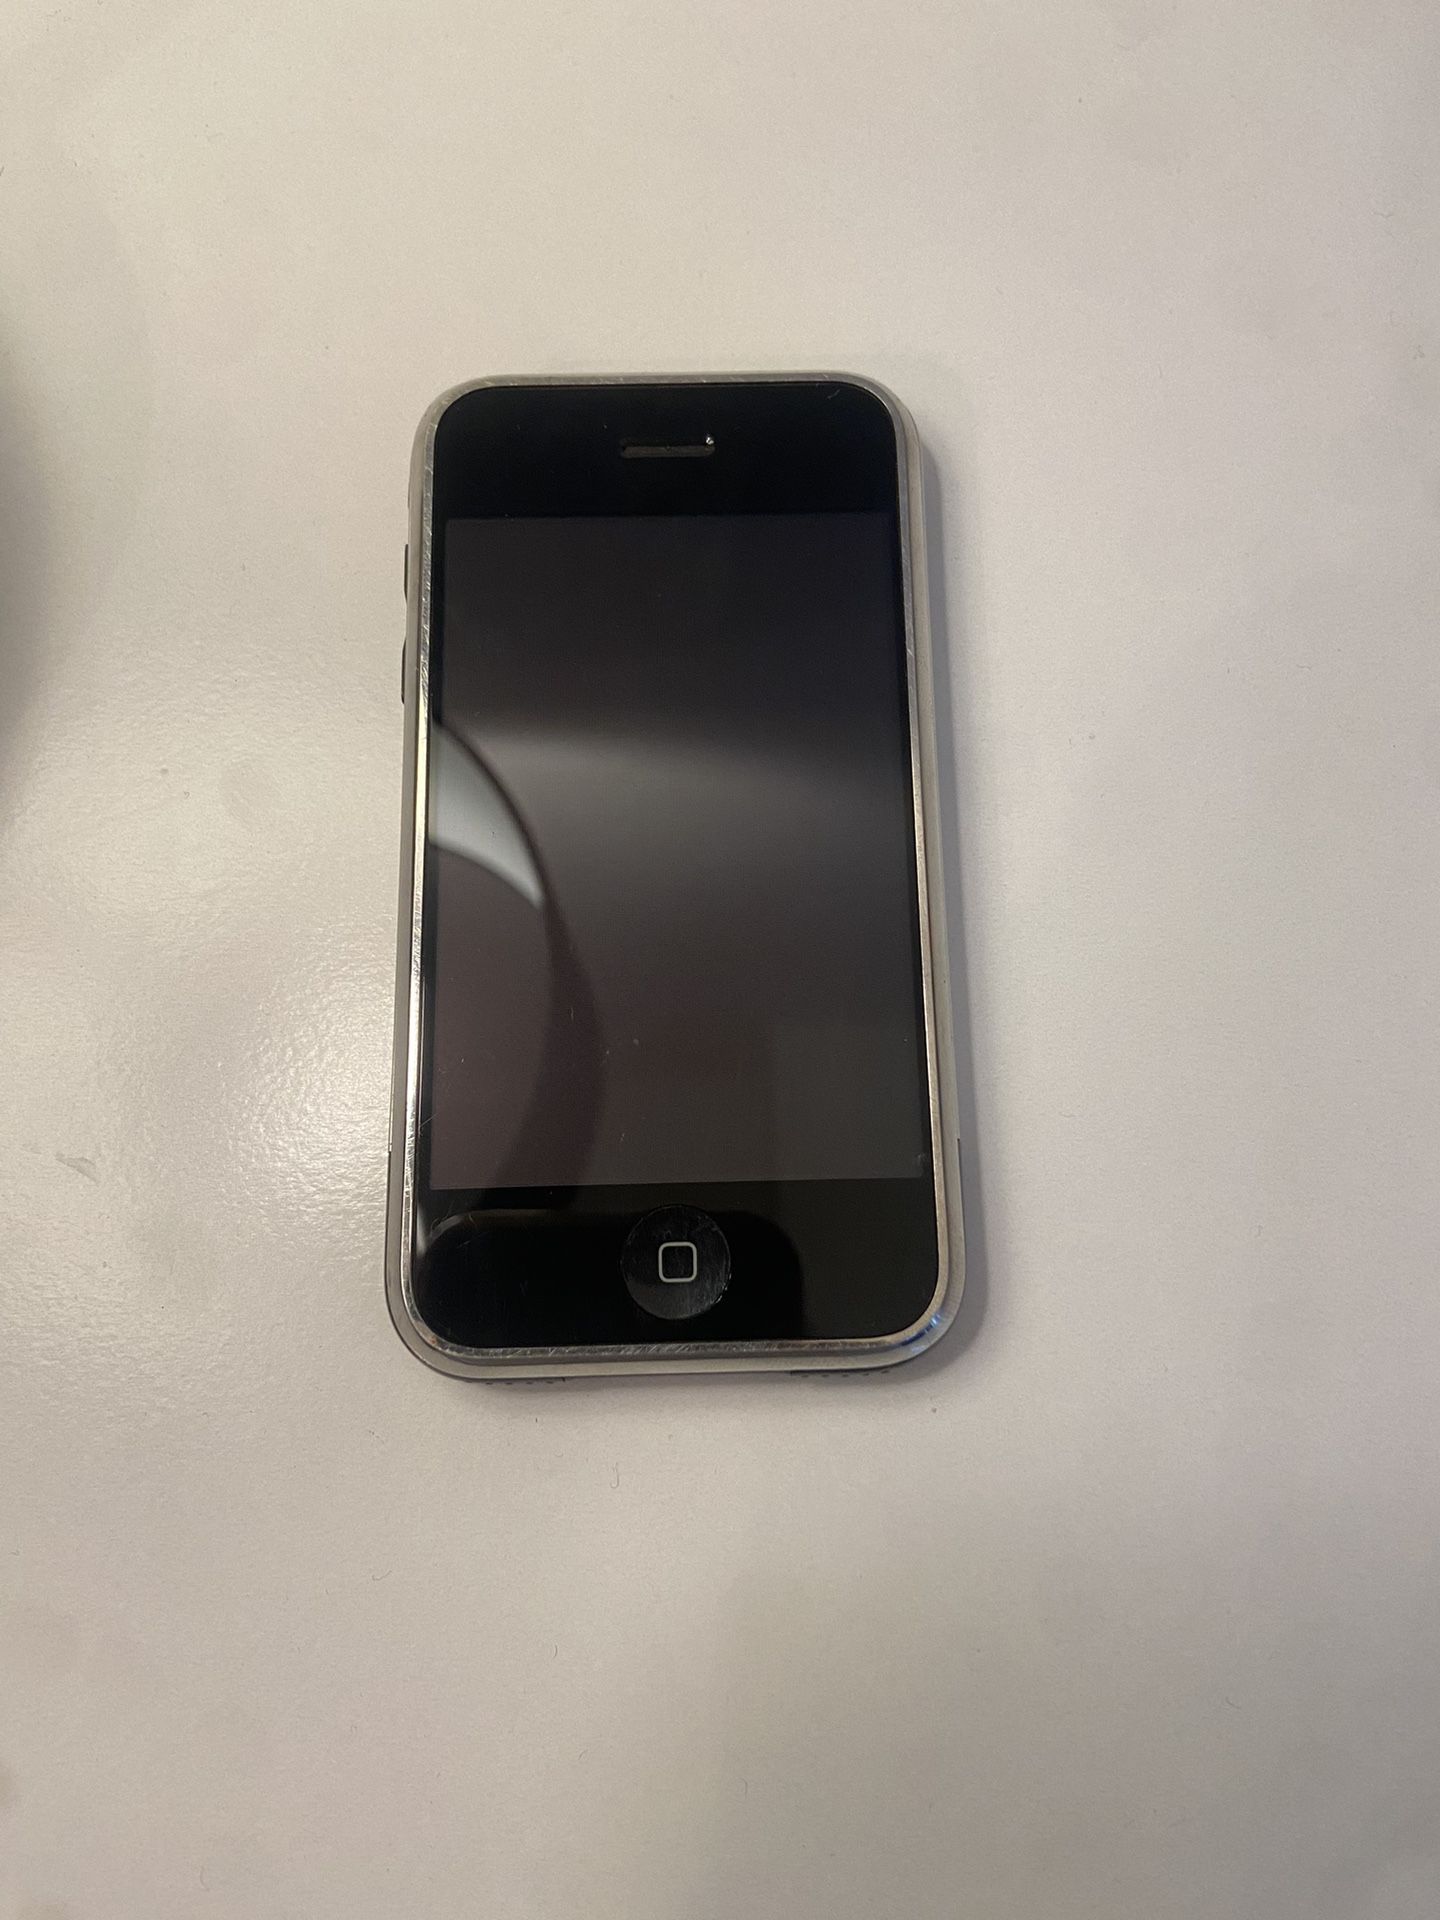 Apple iPhone Model A1203 1st Generation MA712LL/A 8GB Smartphone Black Silver